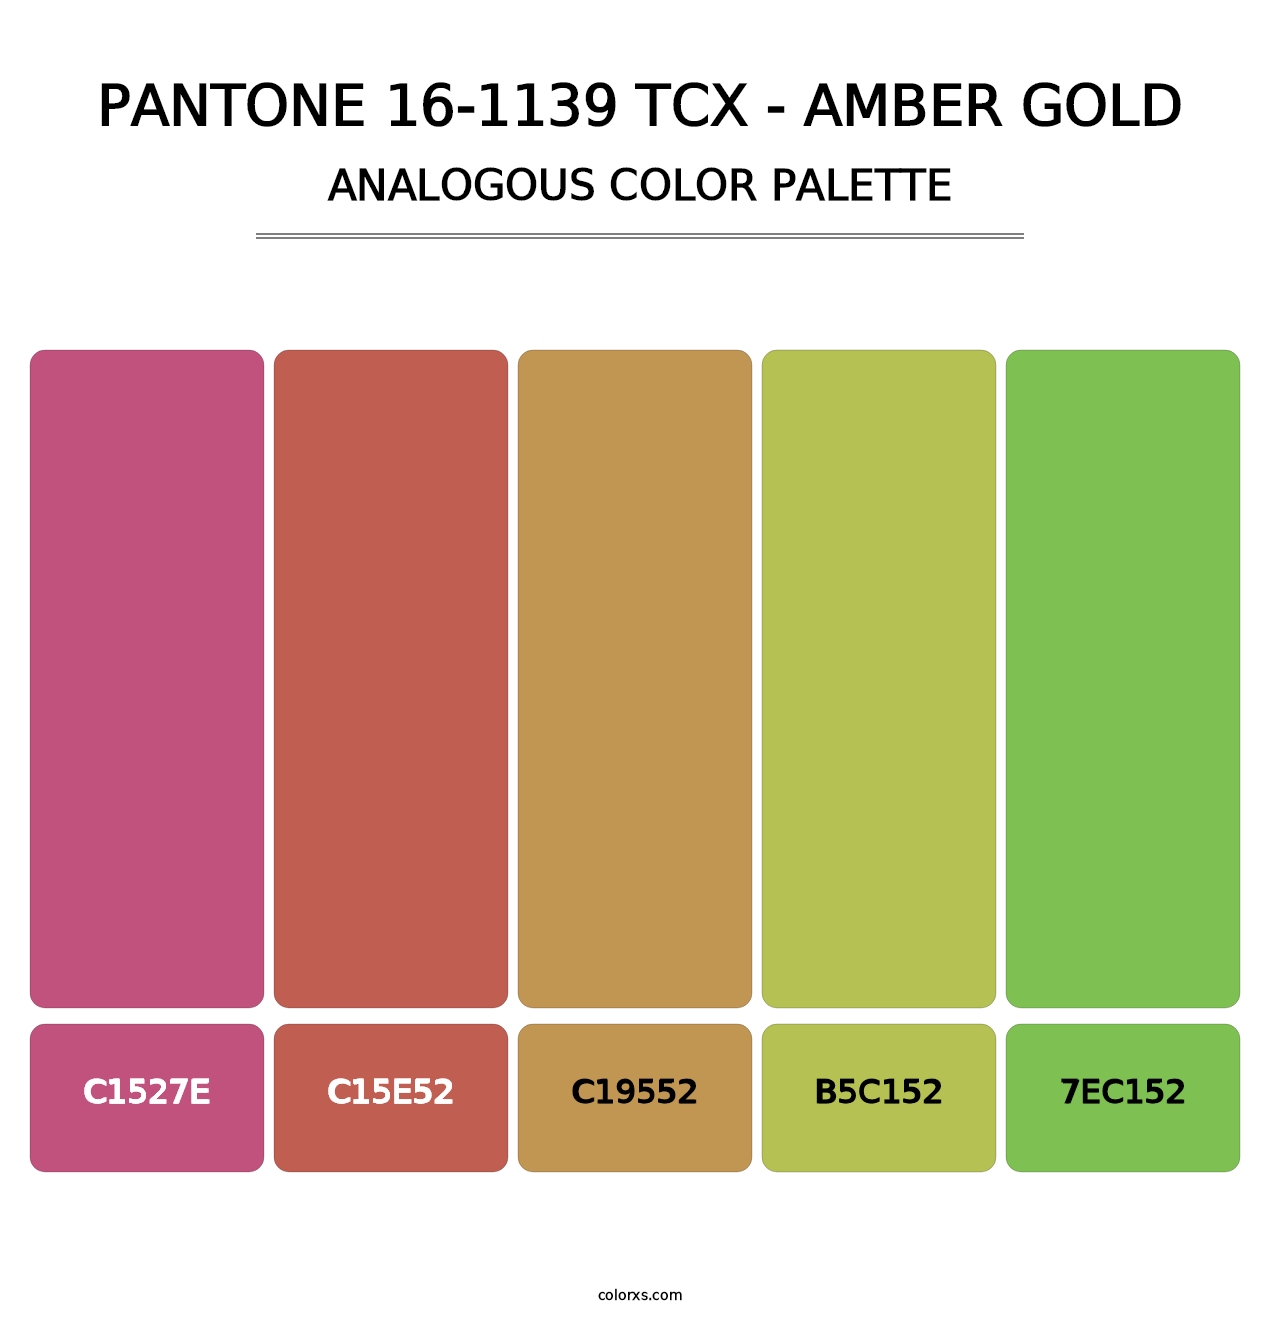 PANTONE 16-1139 TCX - Amber Gold - Analogous Color Palette